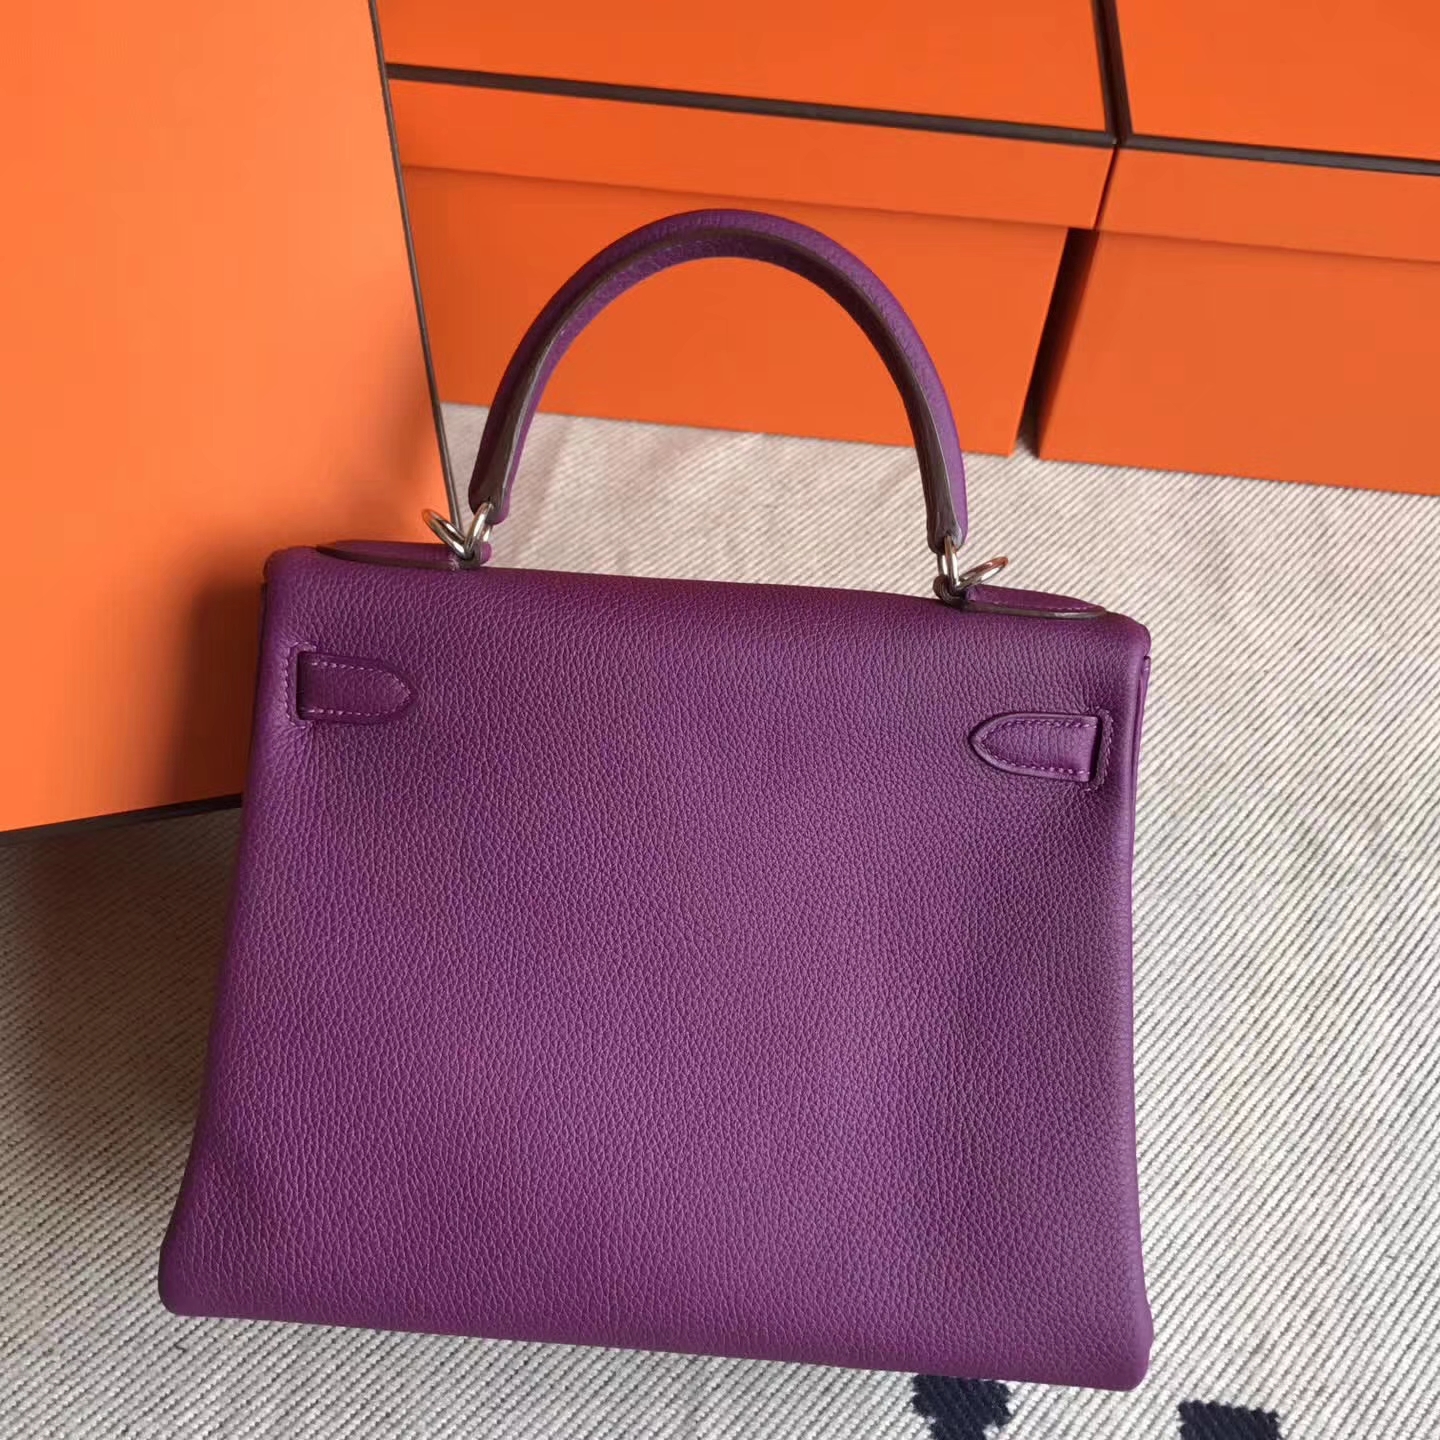 New Arrival Hermes P9 Amenone Purple Togo Leather Kelly28cm Handbag